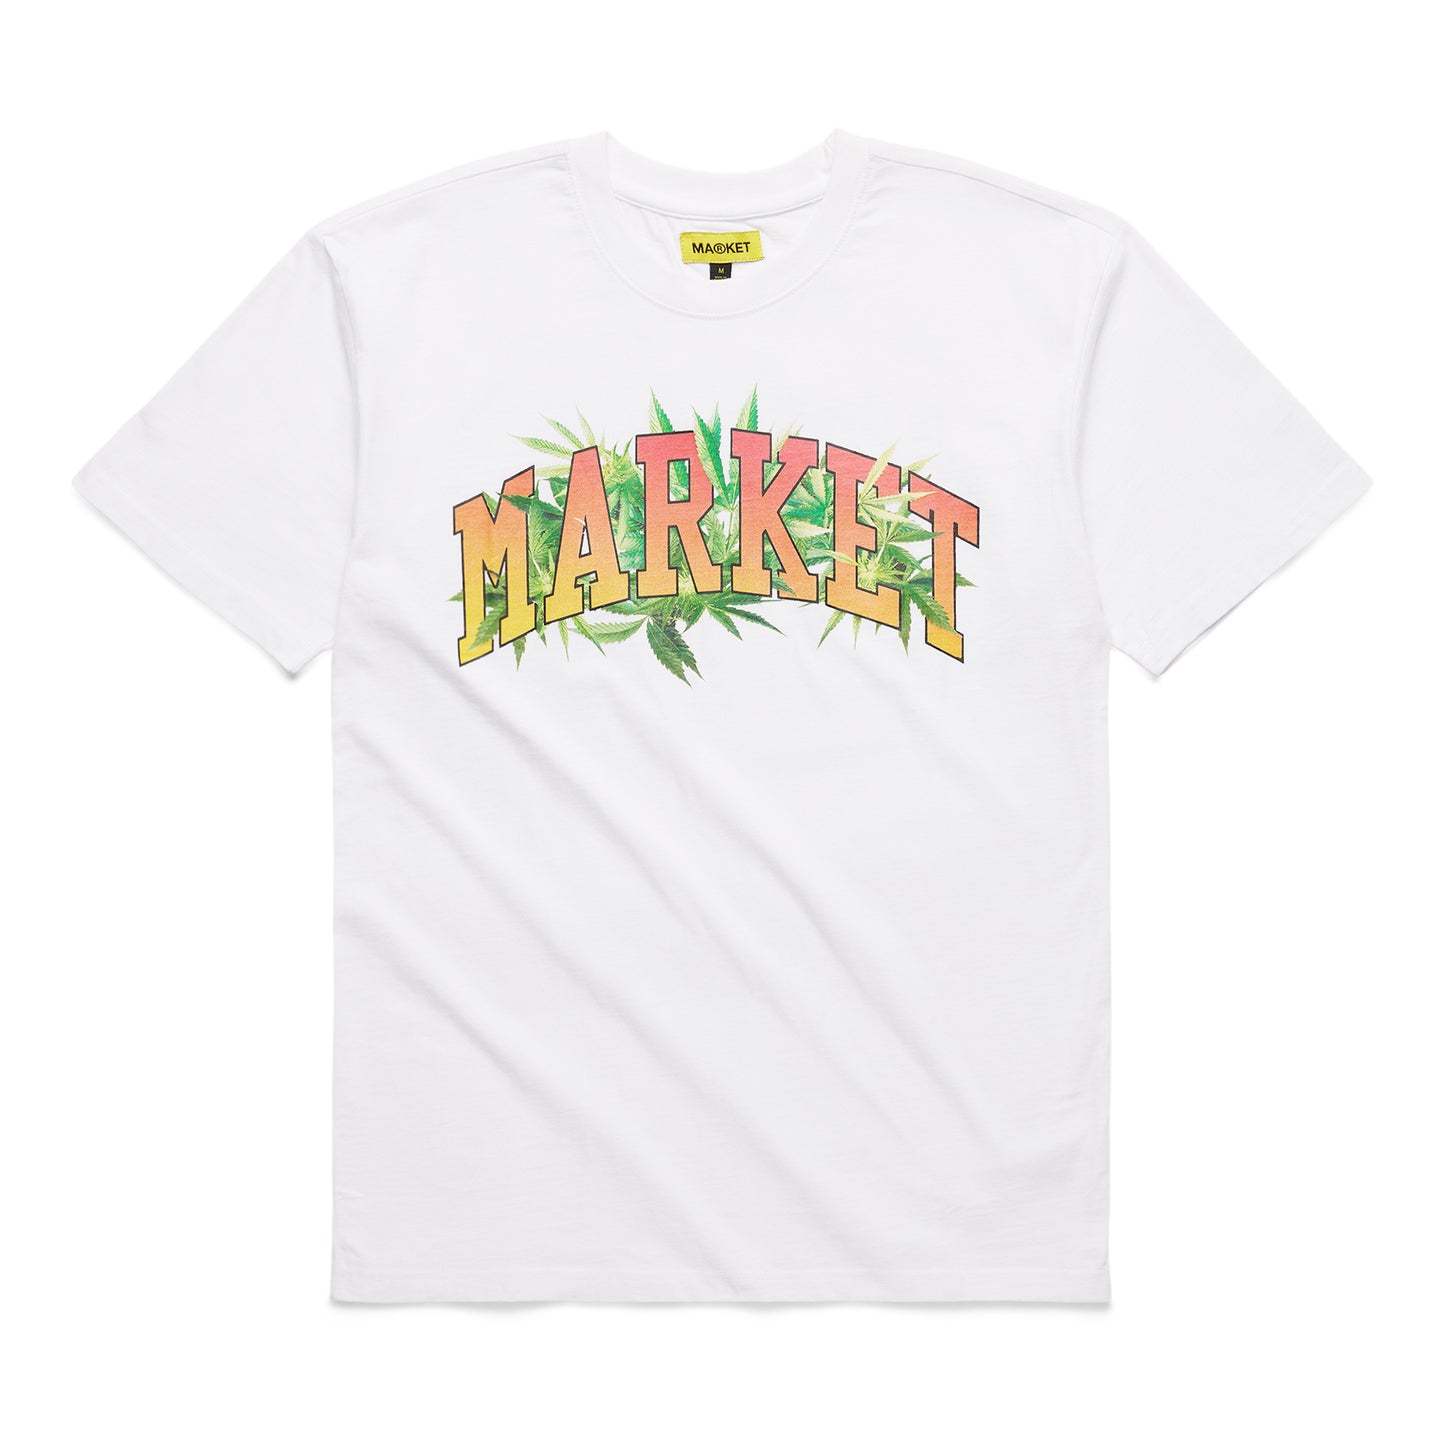 MARKET Arc Herbal Remedy T-Shirt